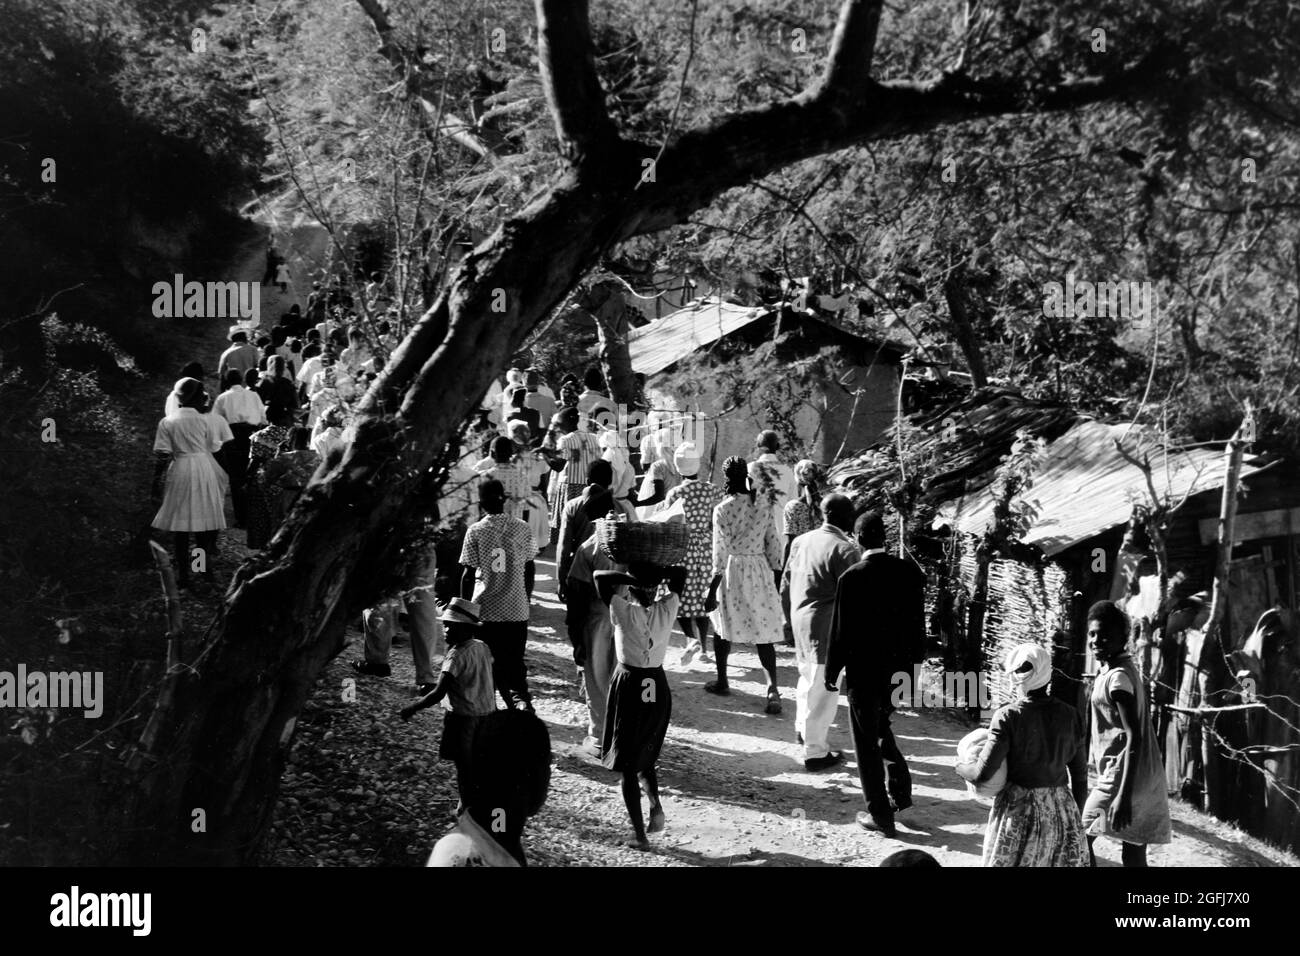 Beerdigungsprozession a Port-au-Prince, Haiti, 1967. Processione dei lutto a Port-au-Prince, Haiti, 1967. Foto Stock